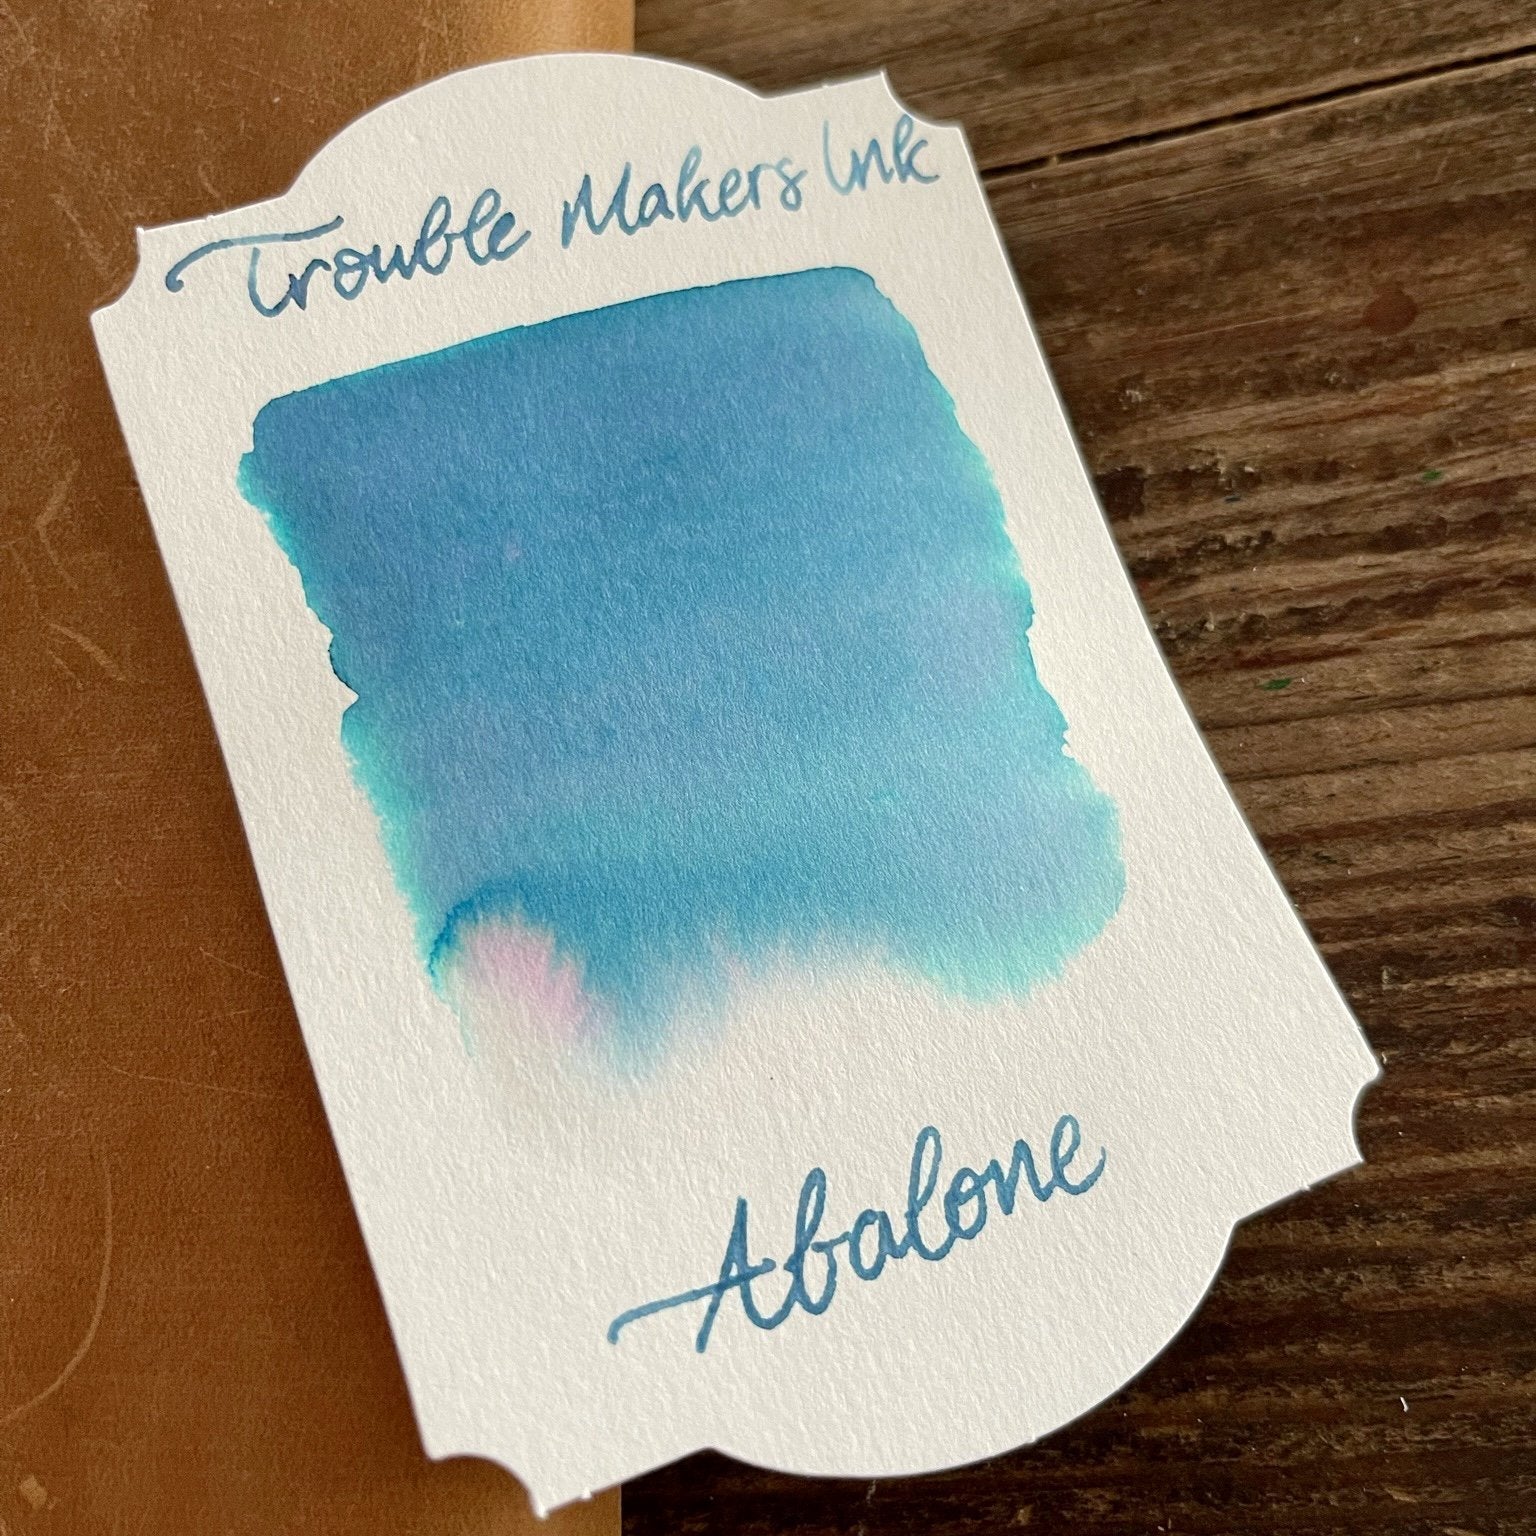 Troublemaker Abalone Ink-bottle